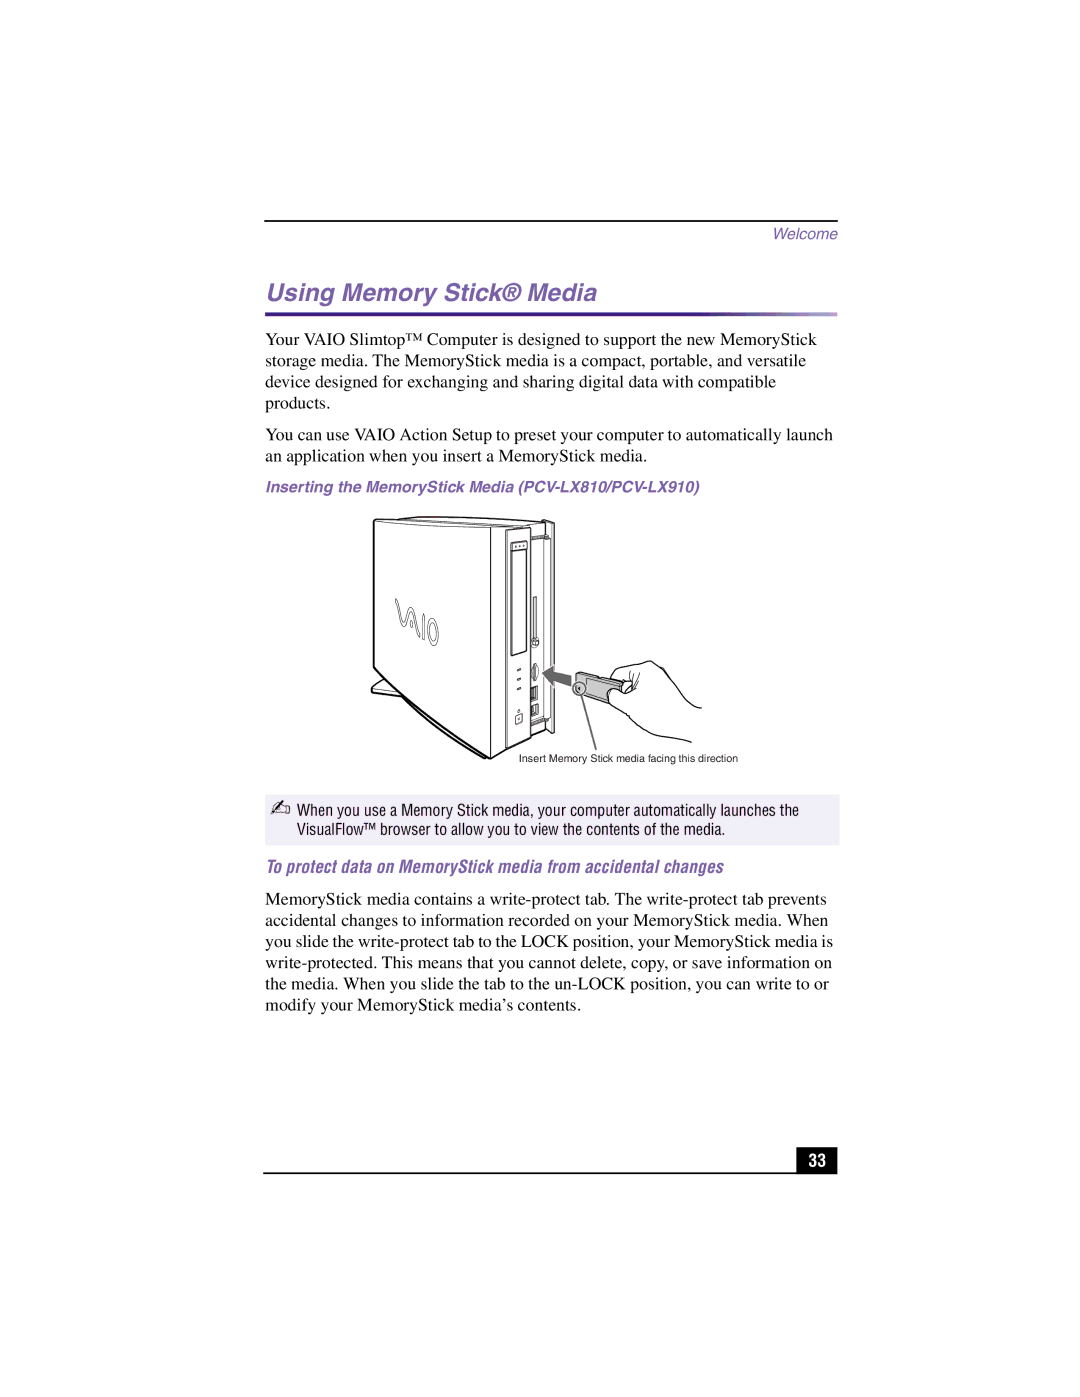 Sony manual Using Memory Stick Media, Inserting the MemoryStick Media PCV-LX810/PCV-LX910 